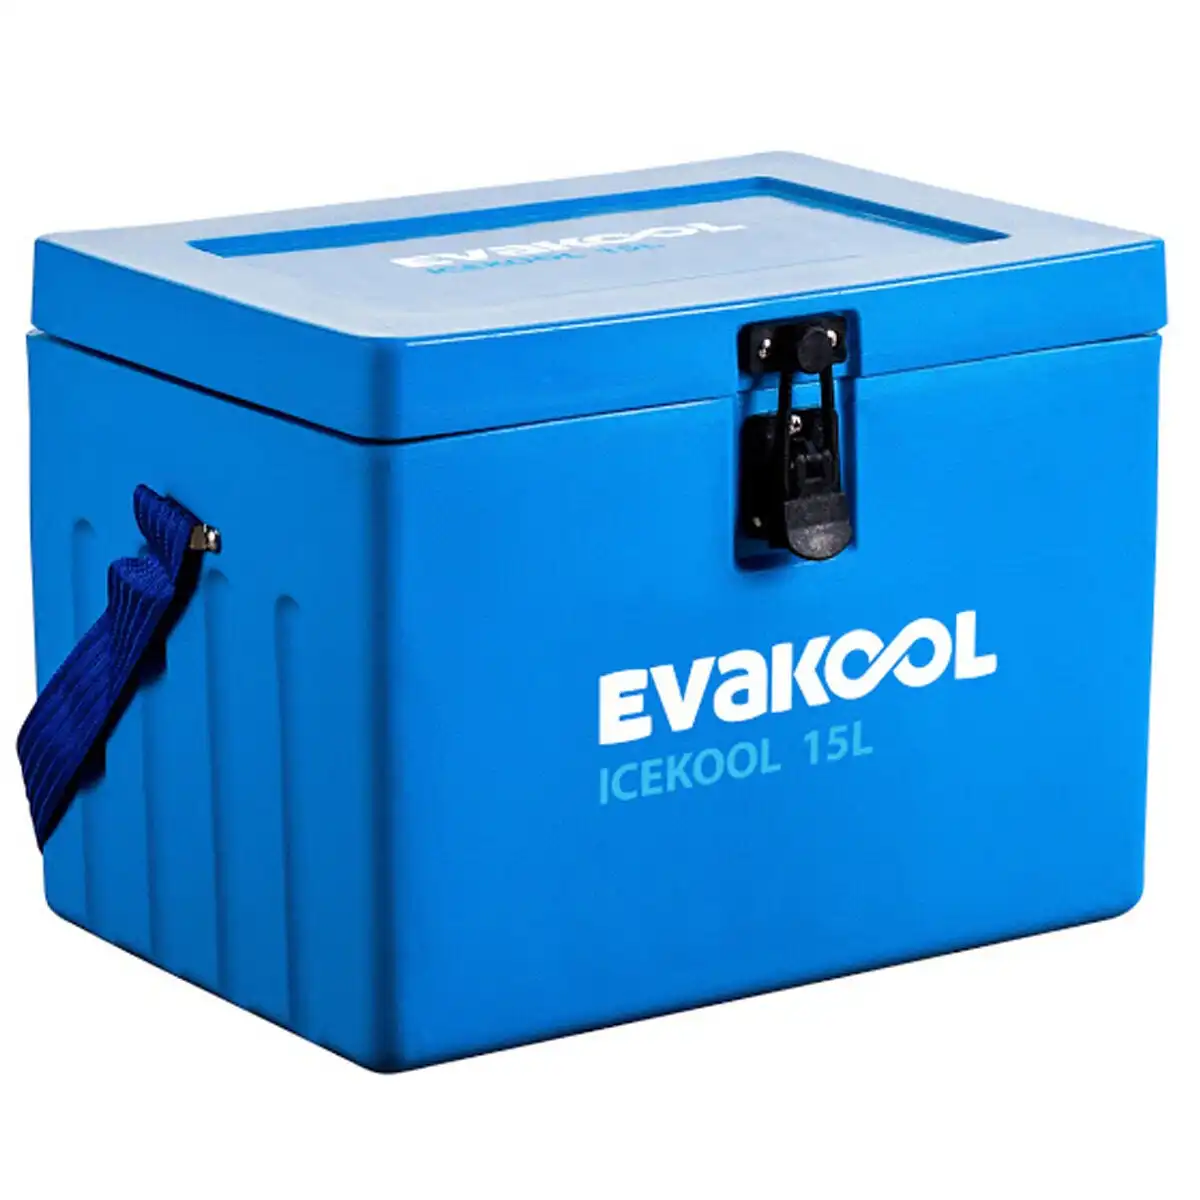 EvaKool 110L Fibreglass Infinity Camping Fridge/Freezer